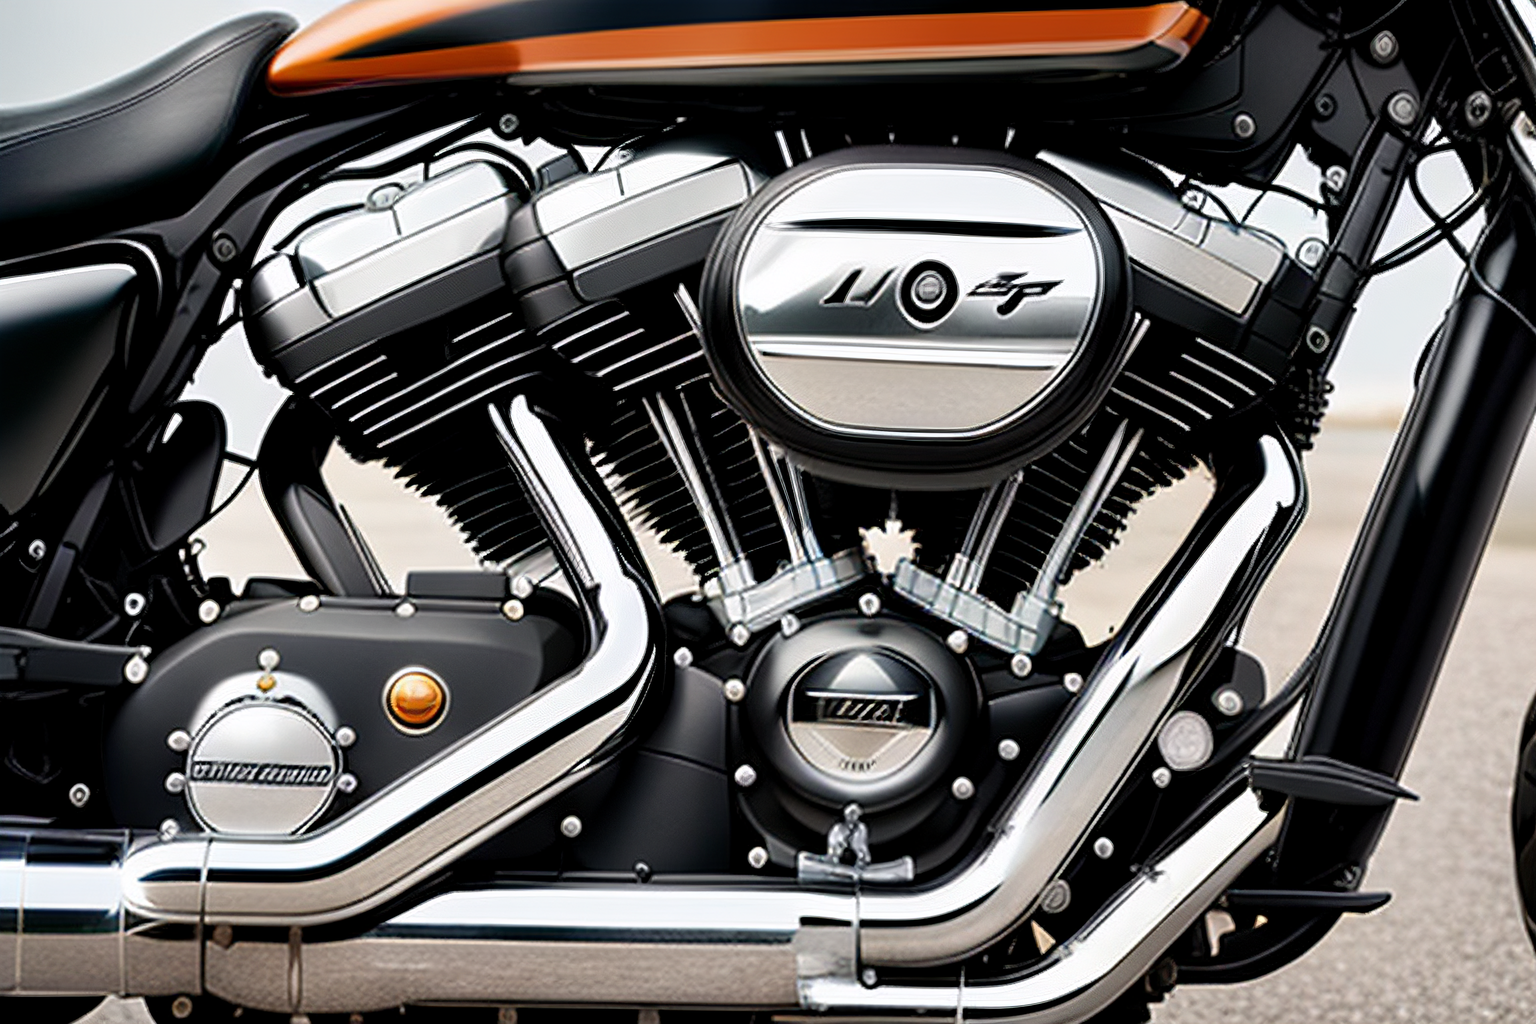 Harley Davidson 1200 Sportster Common Problems